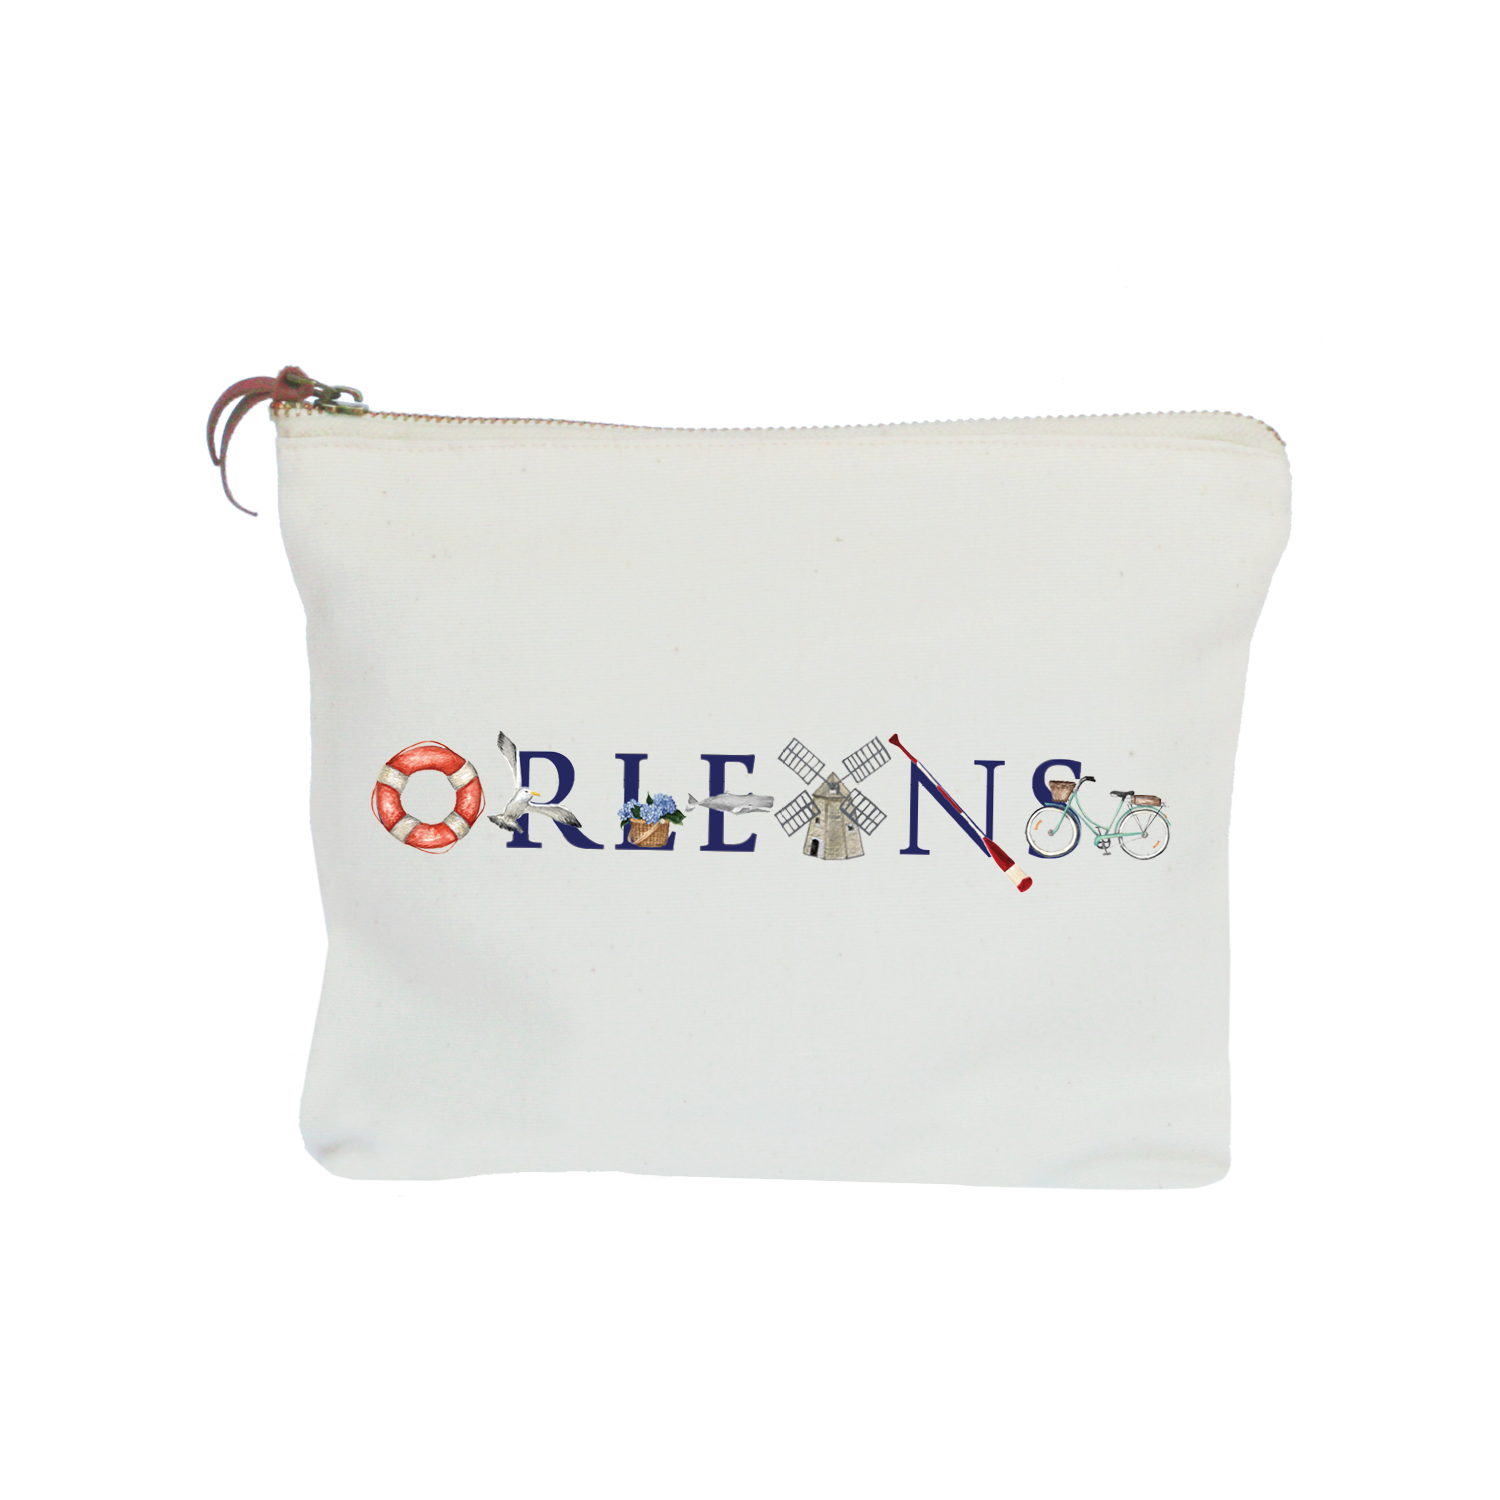 orleans zipper pouch